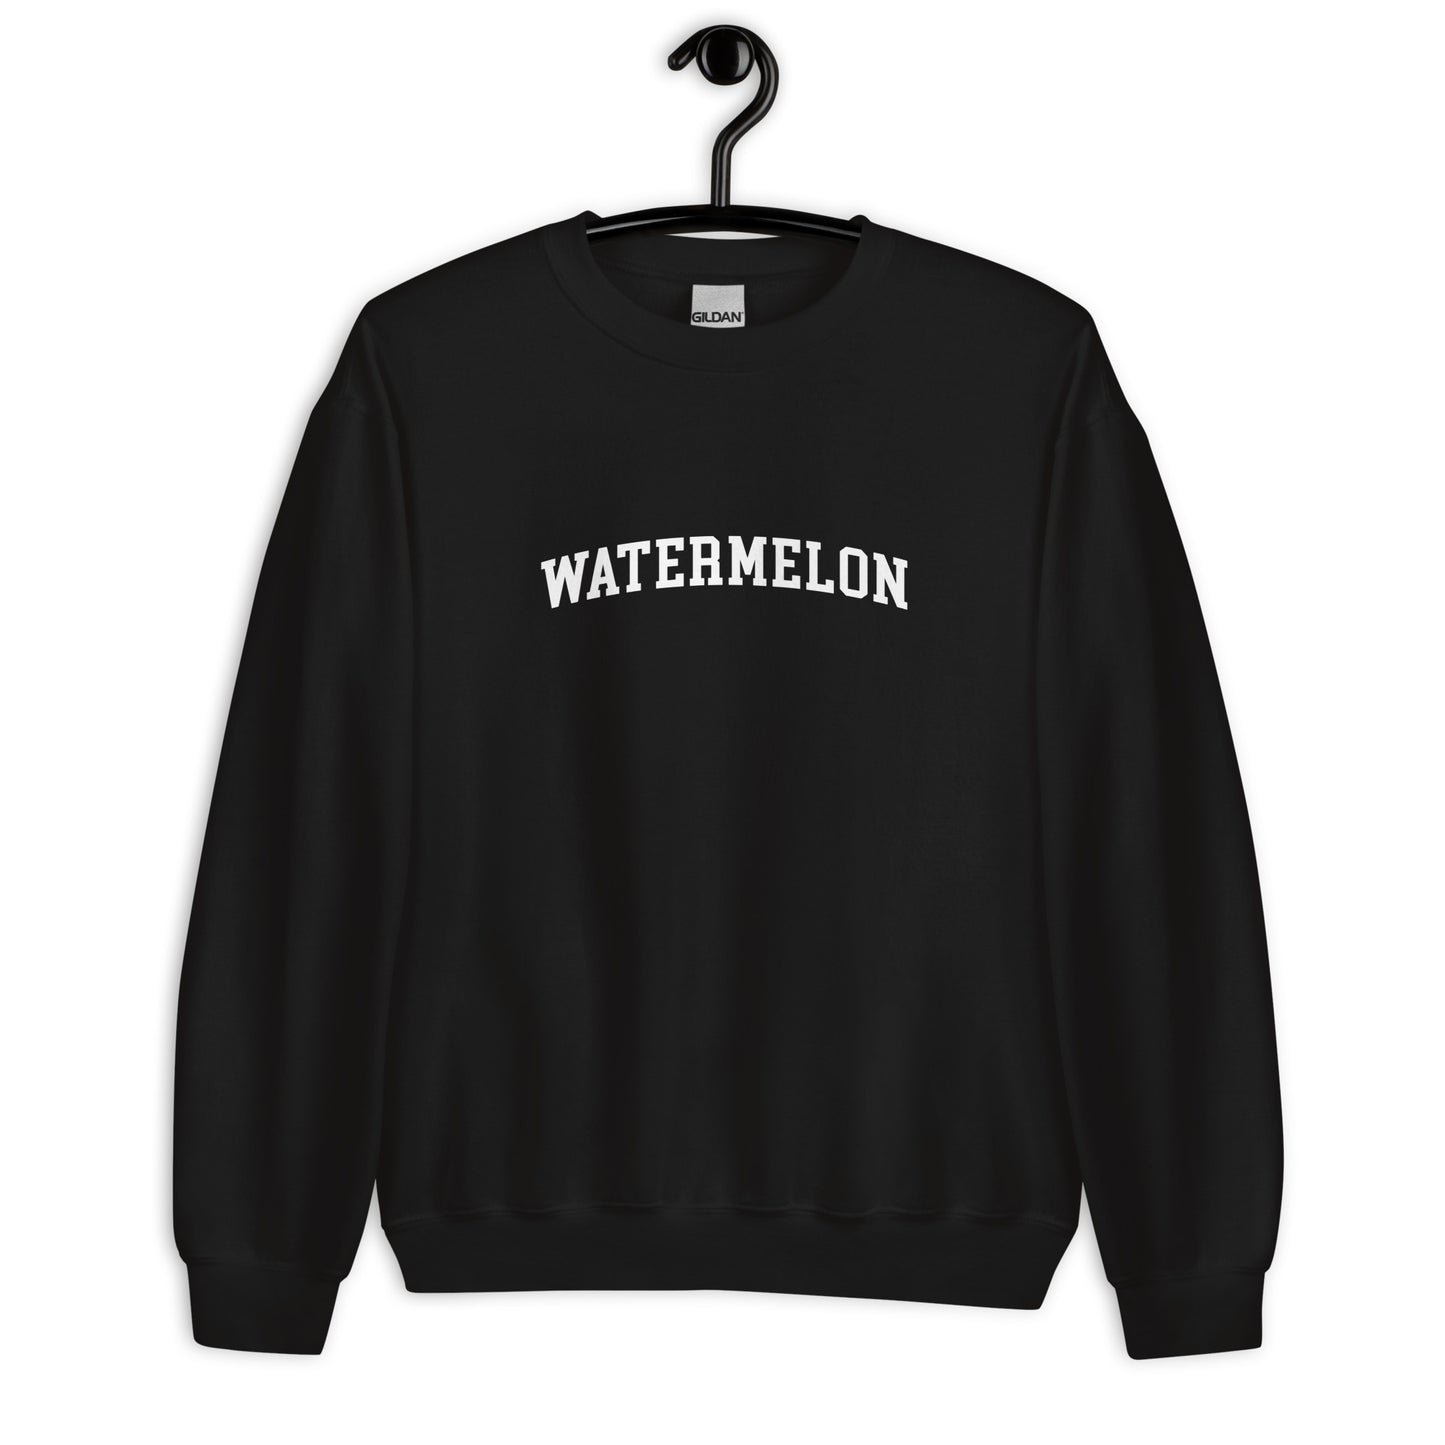 Watermelon Sweatshirt - Arched Font